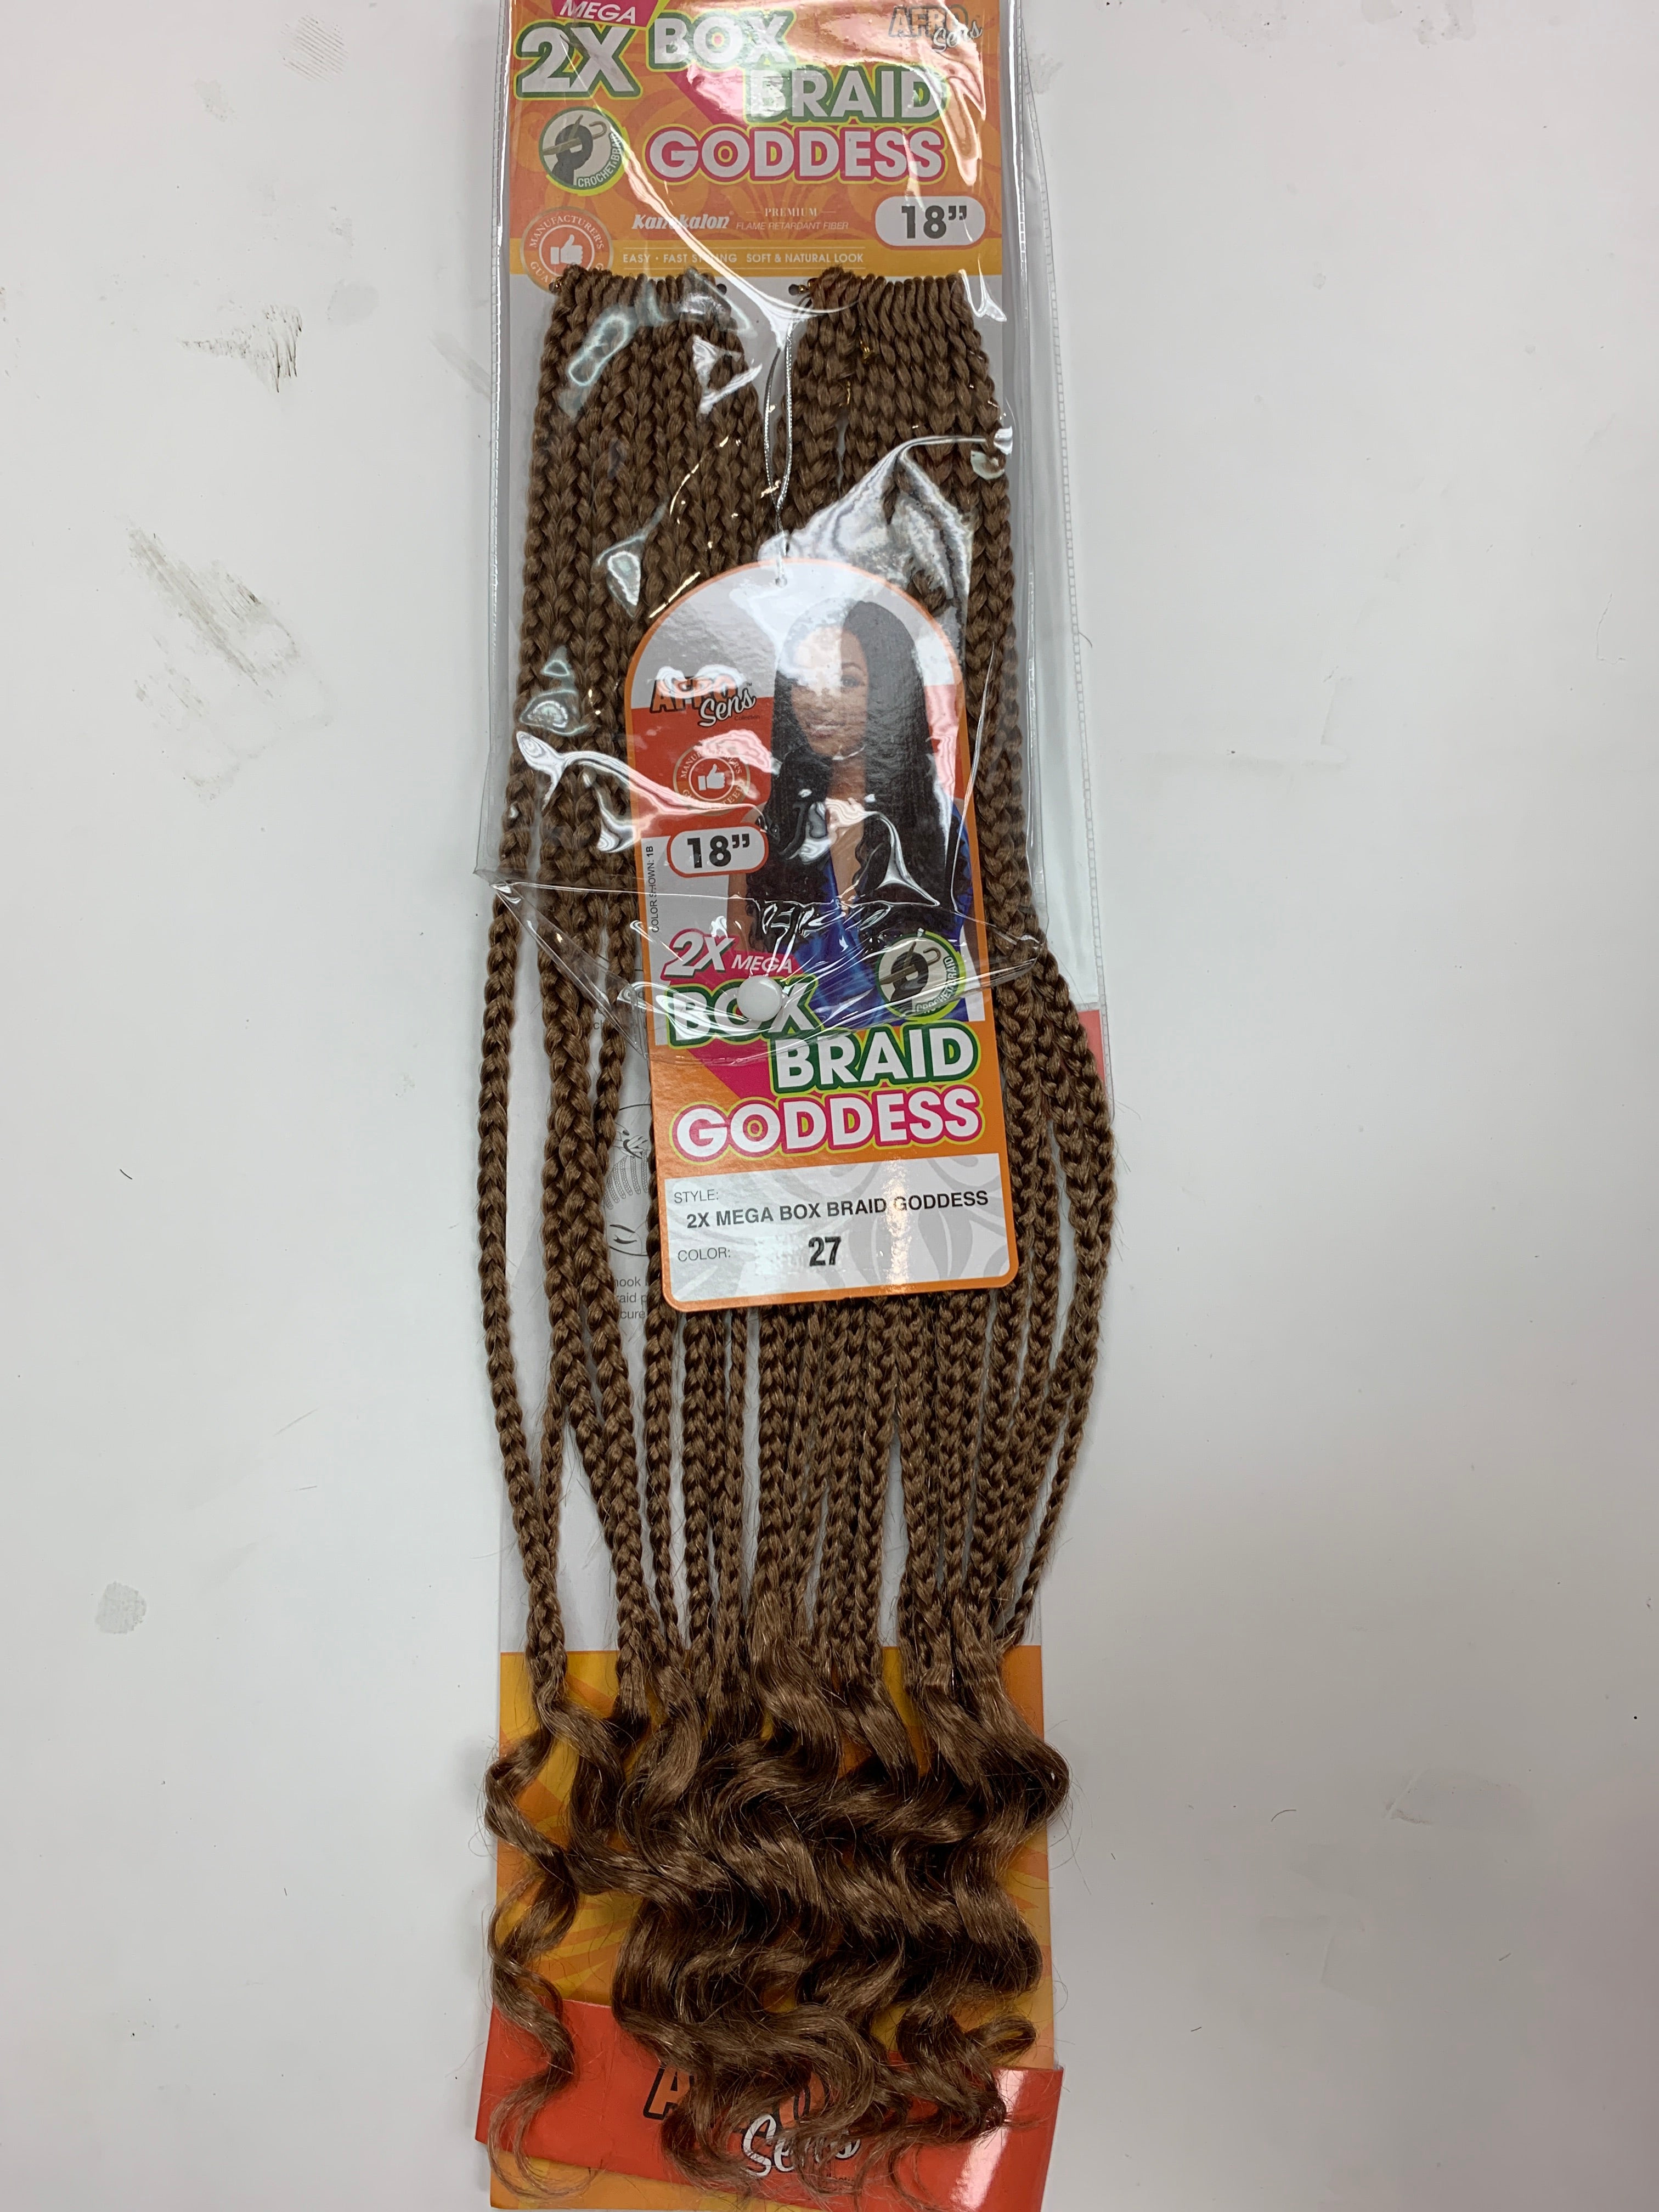 Afro sens 2x mega box braid goddess 18”